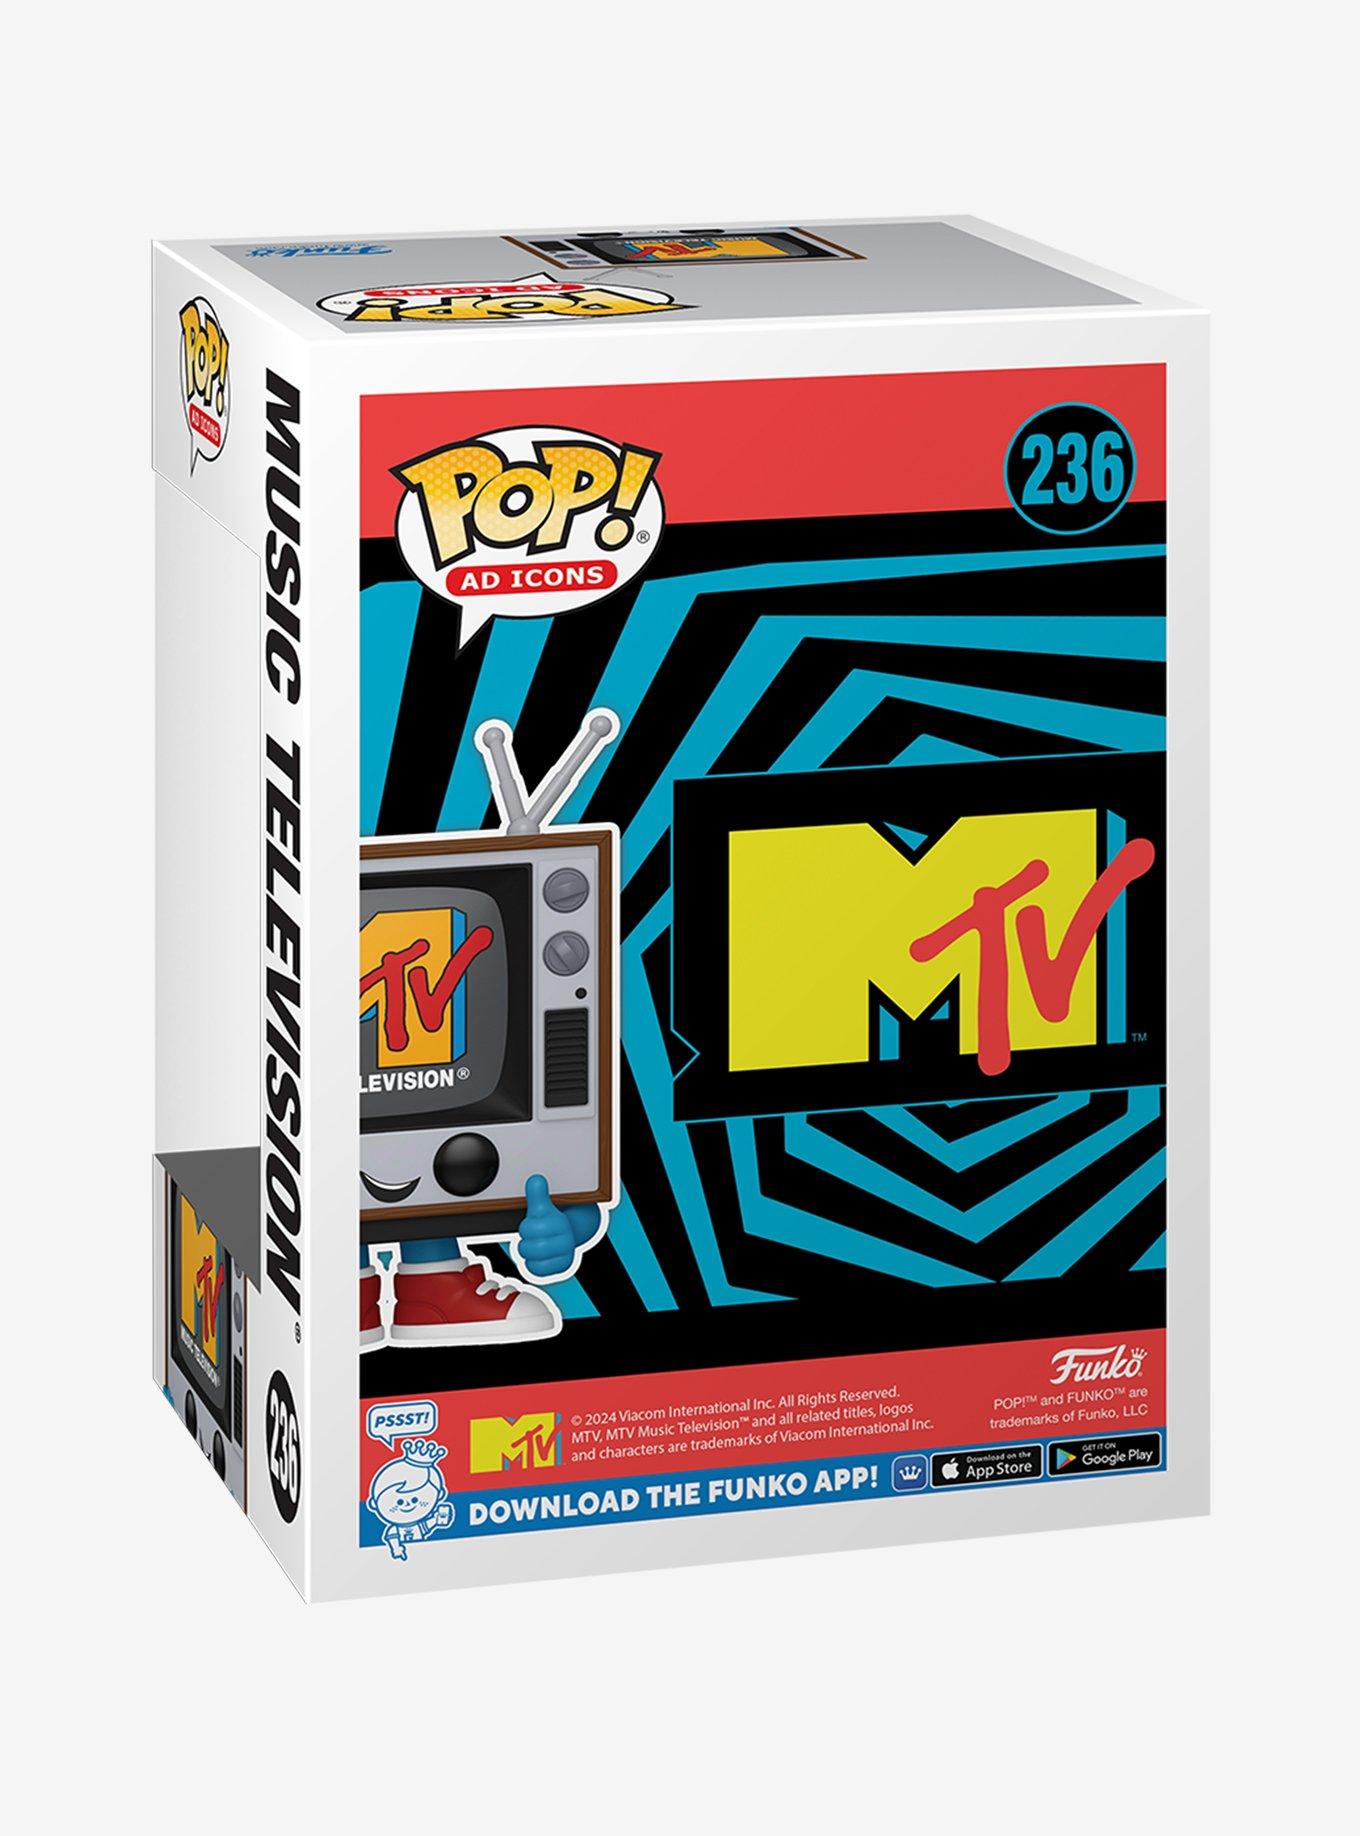 Funko MTV Pop! Ad Icons Music Television Vinyl Figure, , alternate